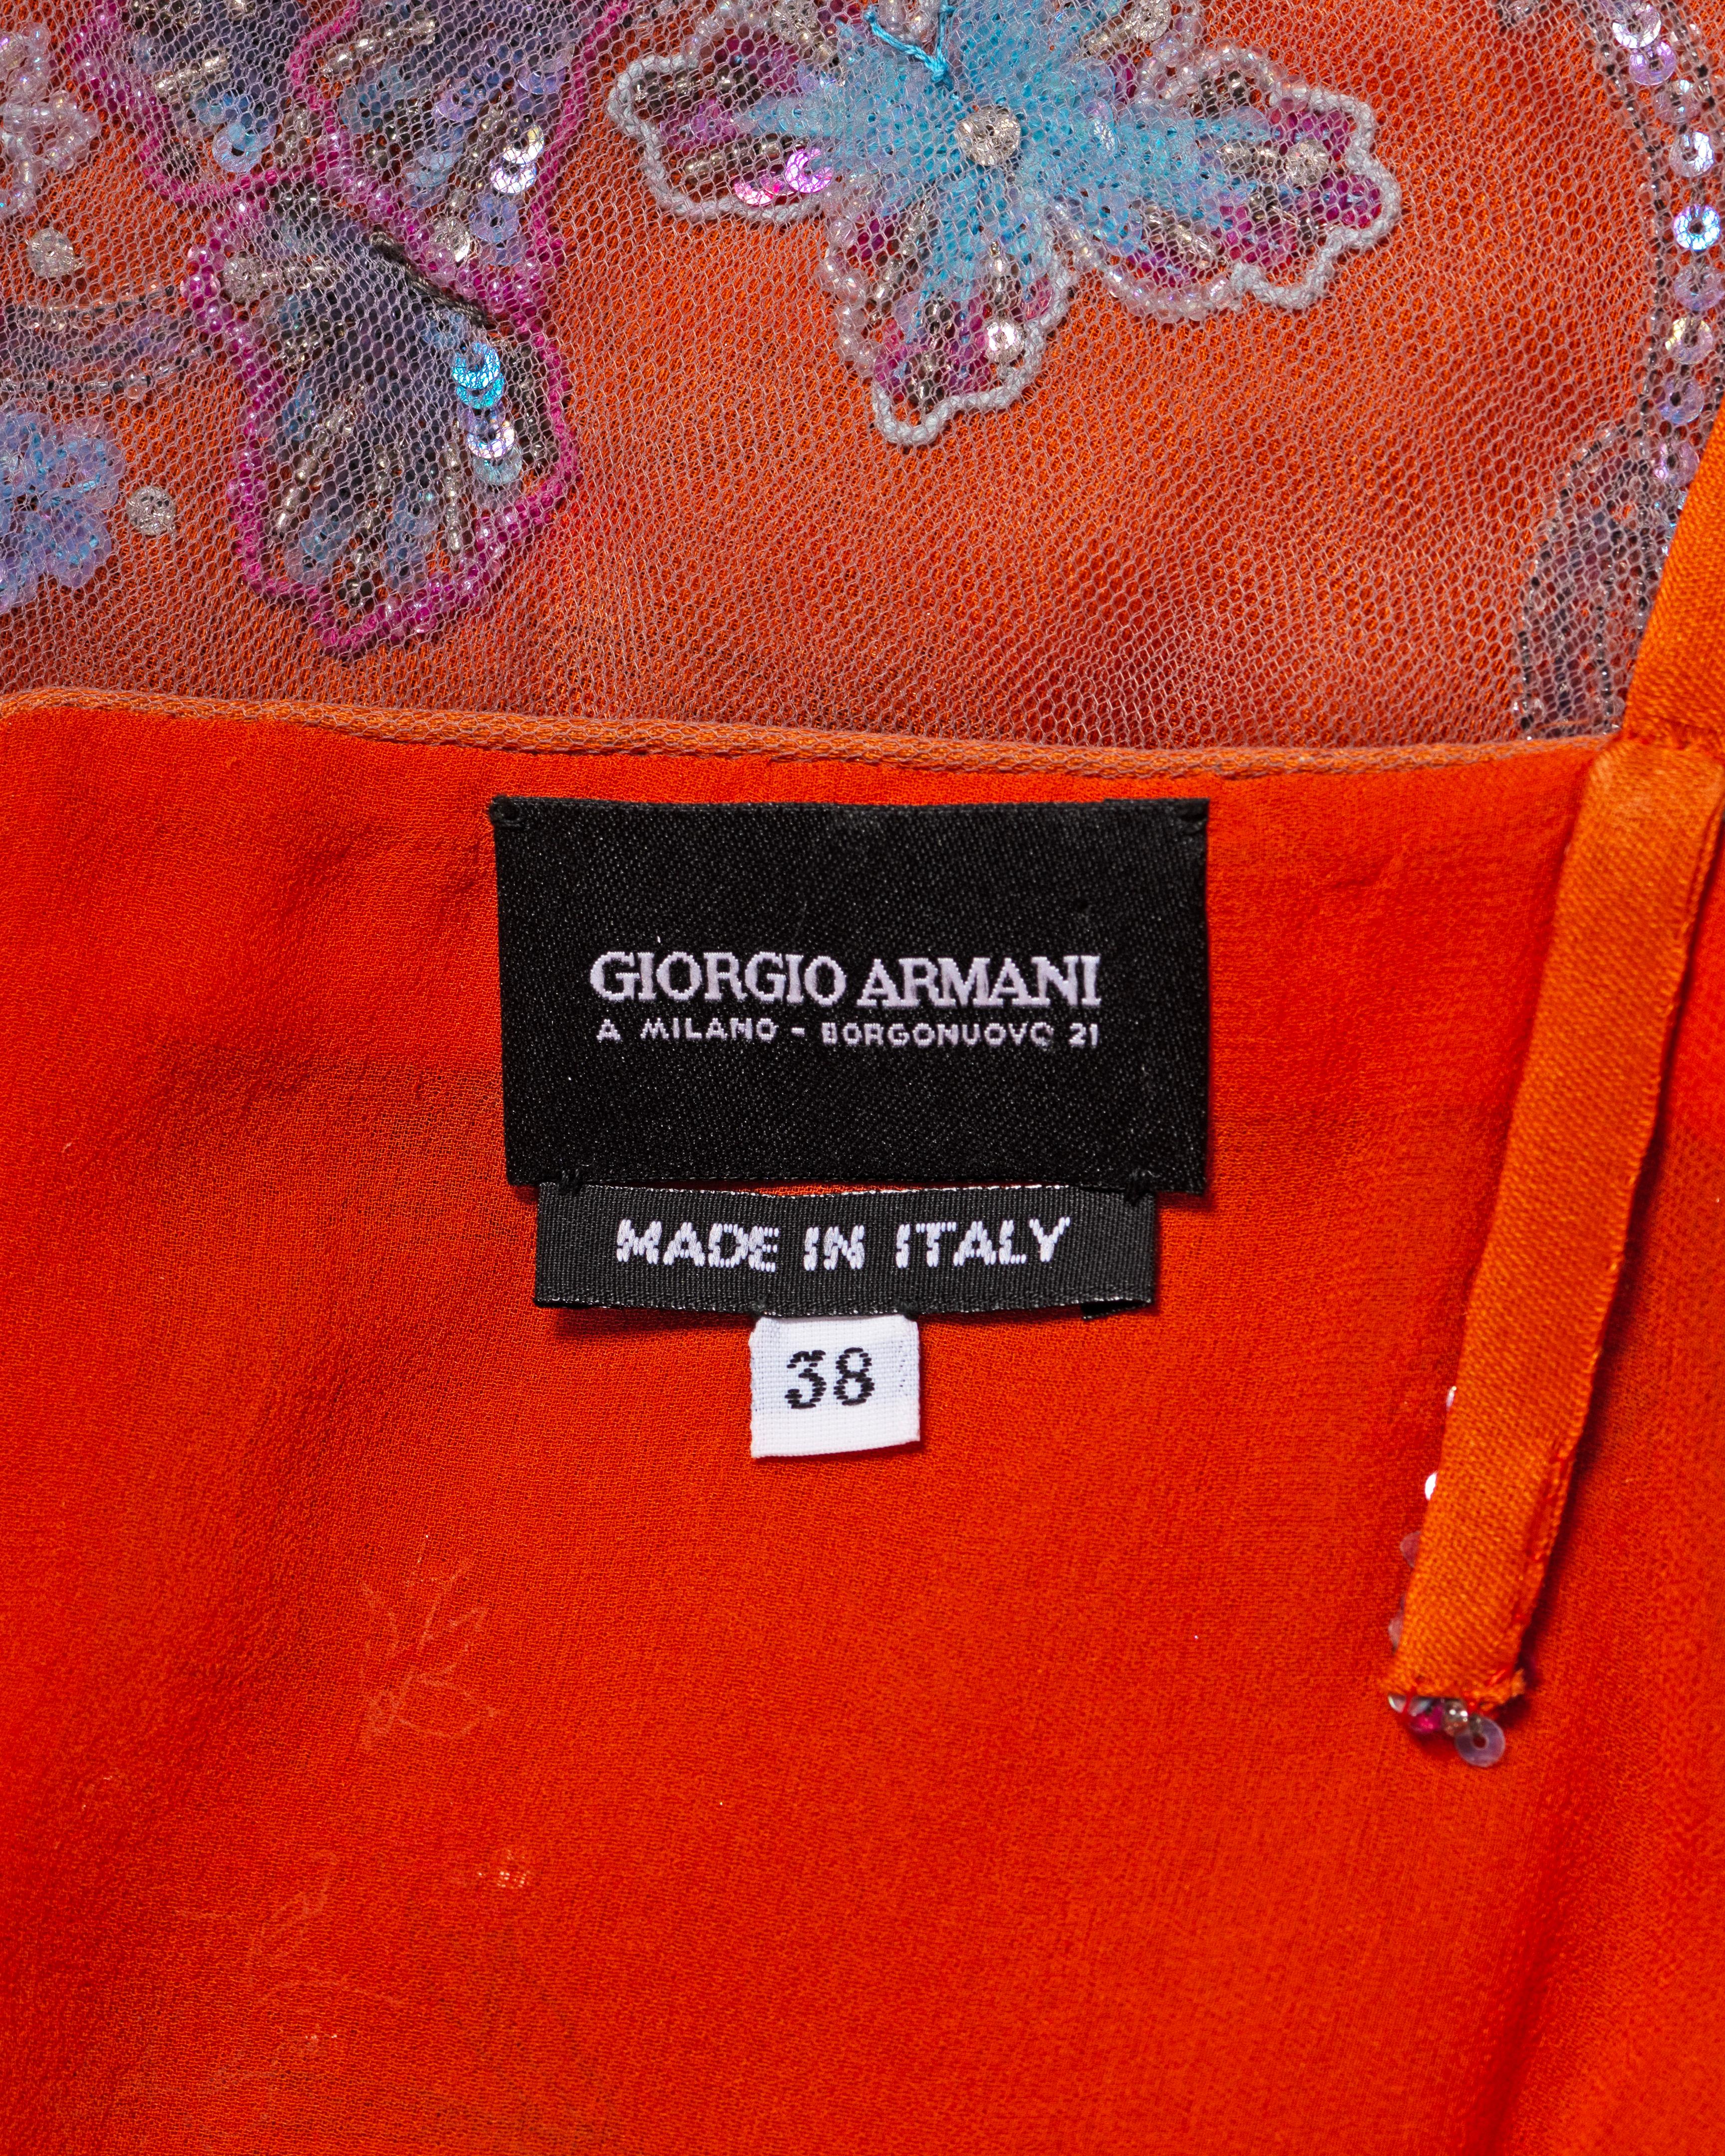 Giorgio Armani Orange Silk Beaded Evening Dress With Organza Overlay, SS 1999 13